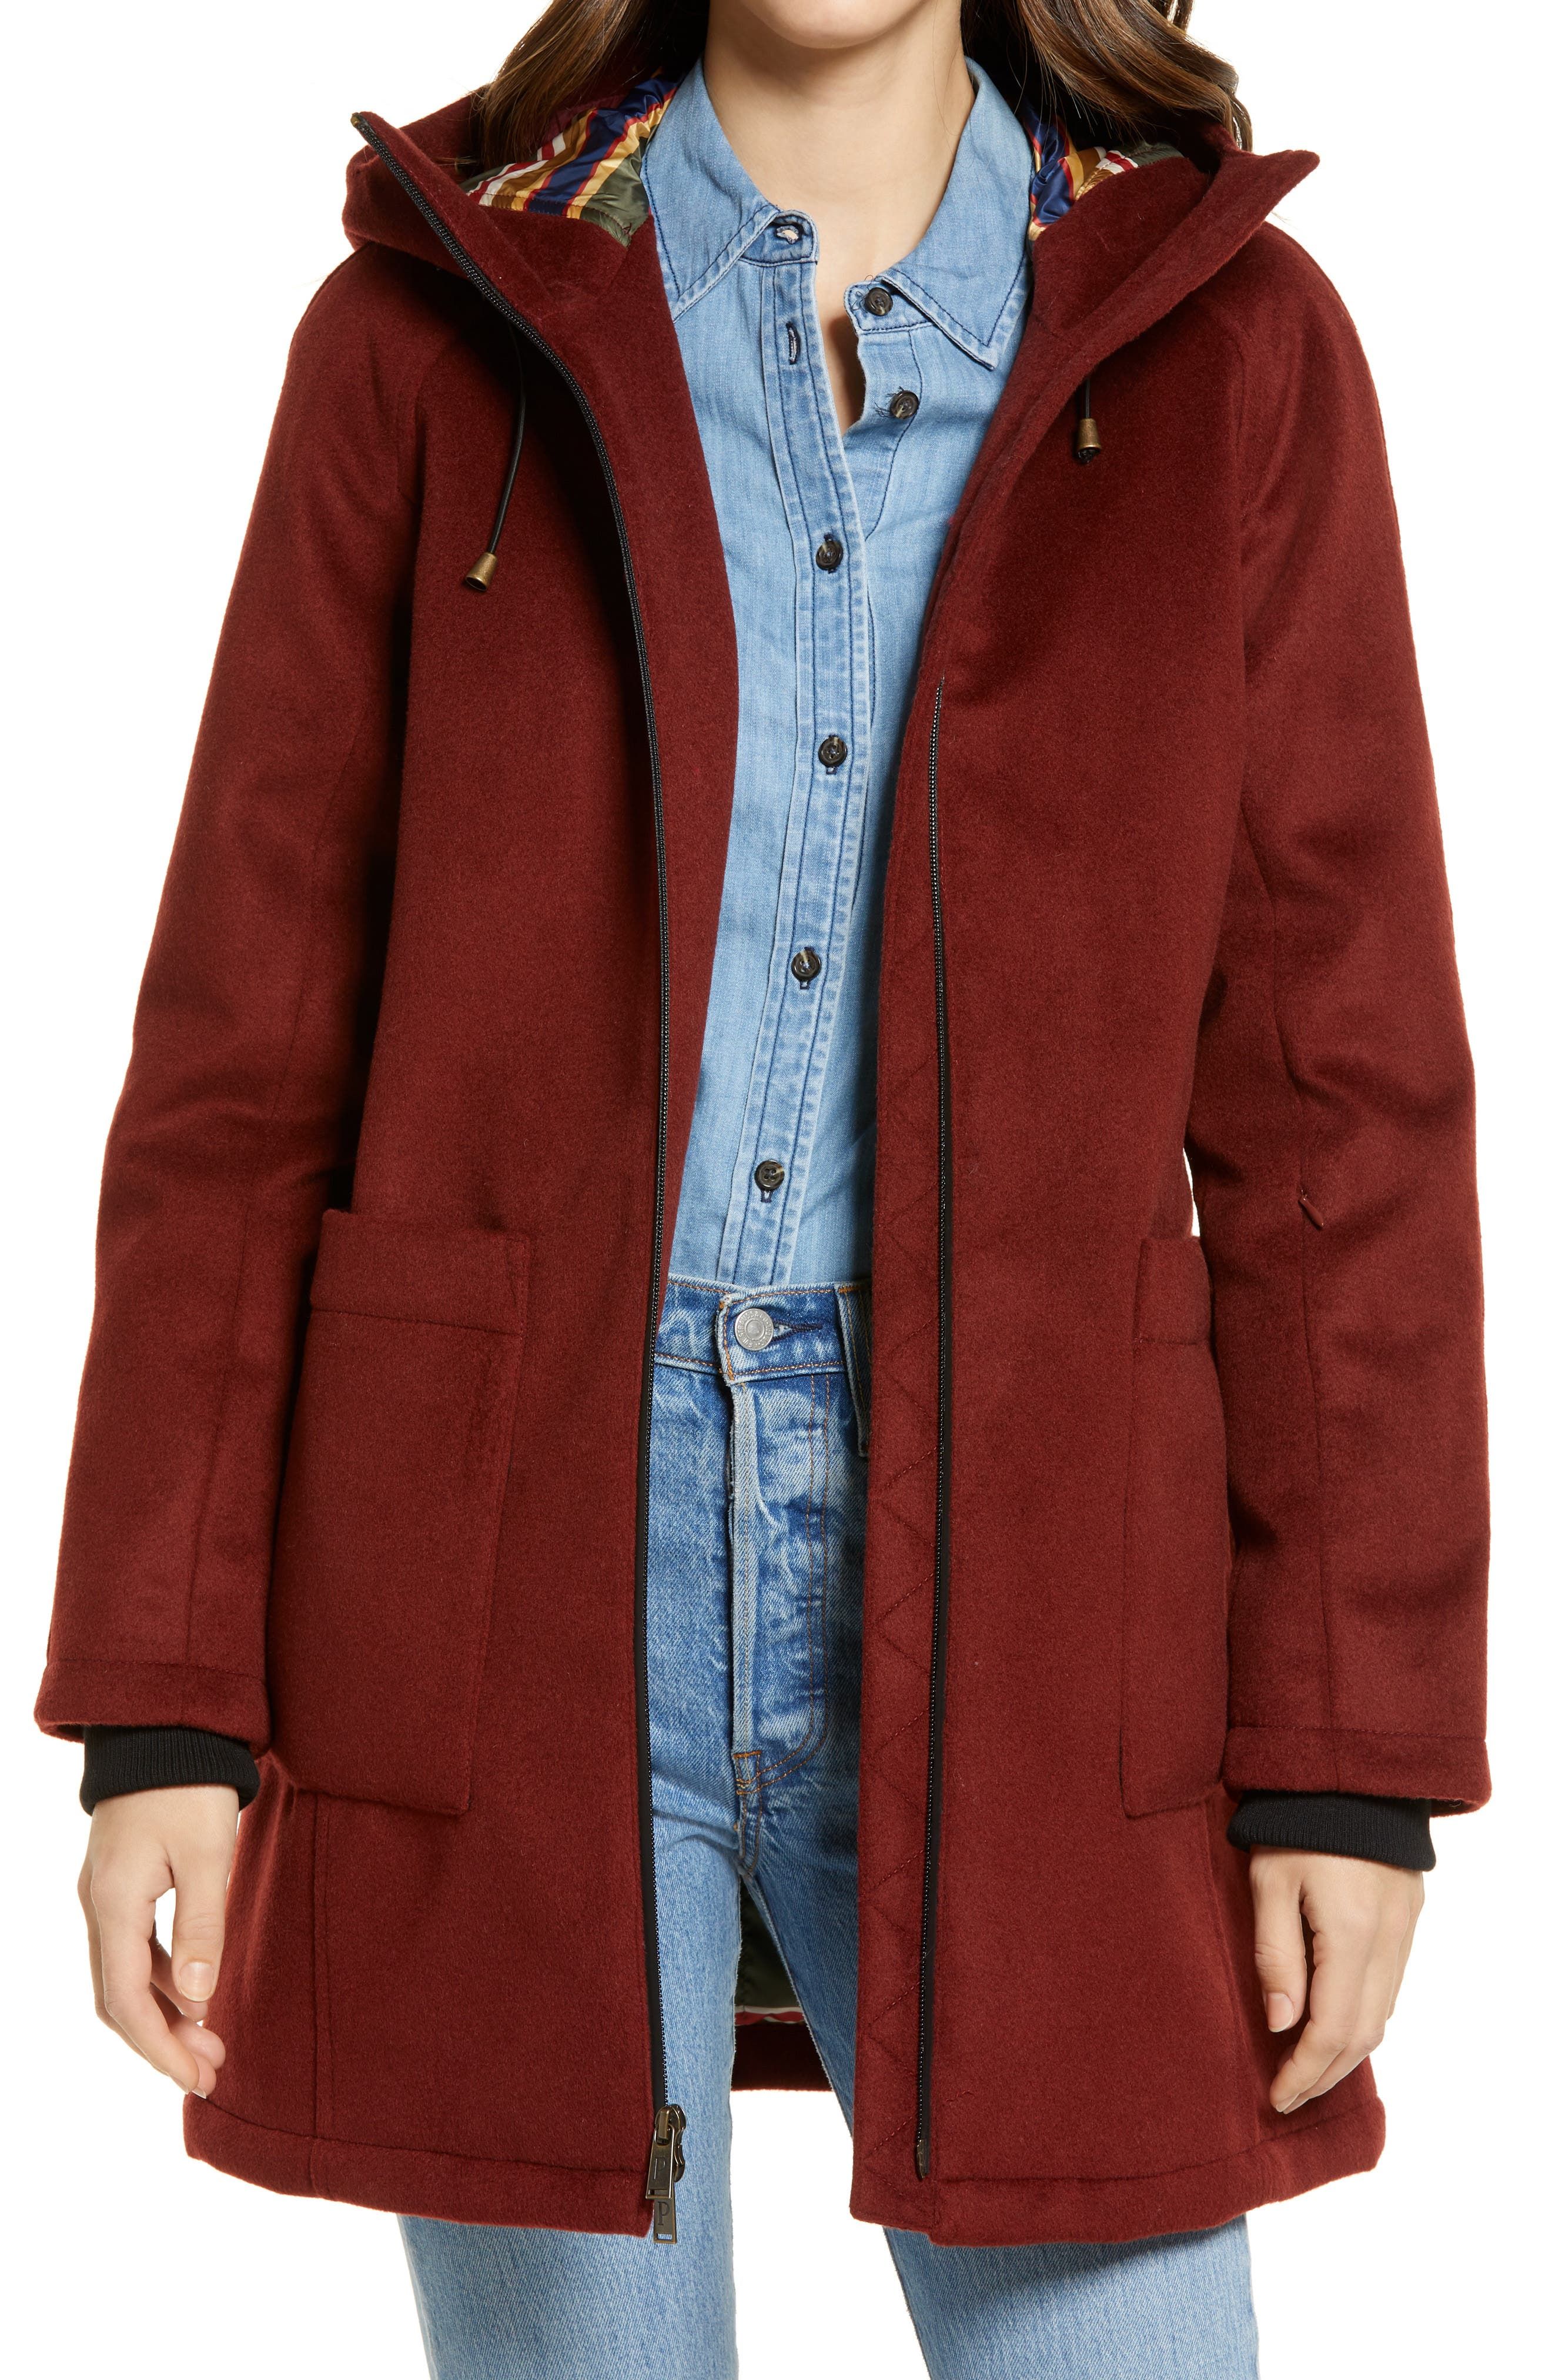 AOGOTO Womens Casual Fashion Winter Warm Hooded Coat Long Cotton Padded Jackets Pocket Coats 